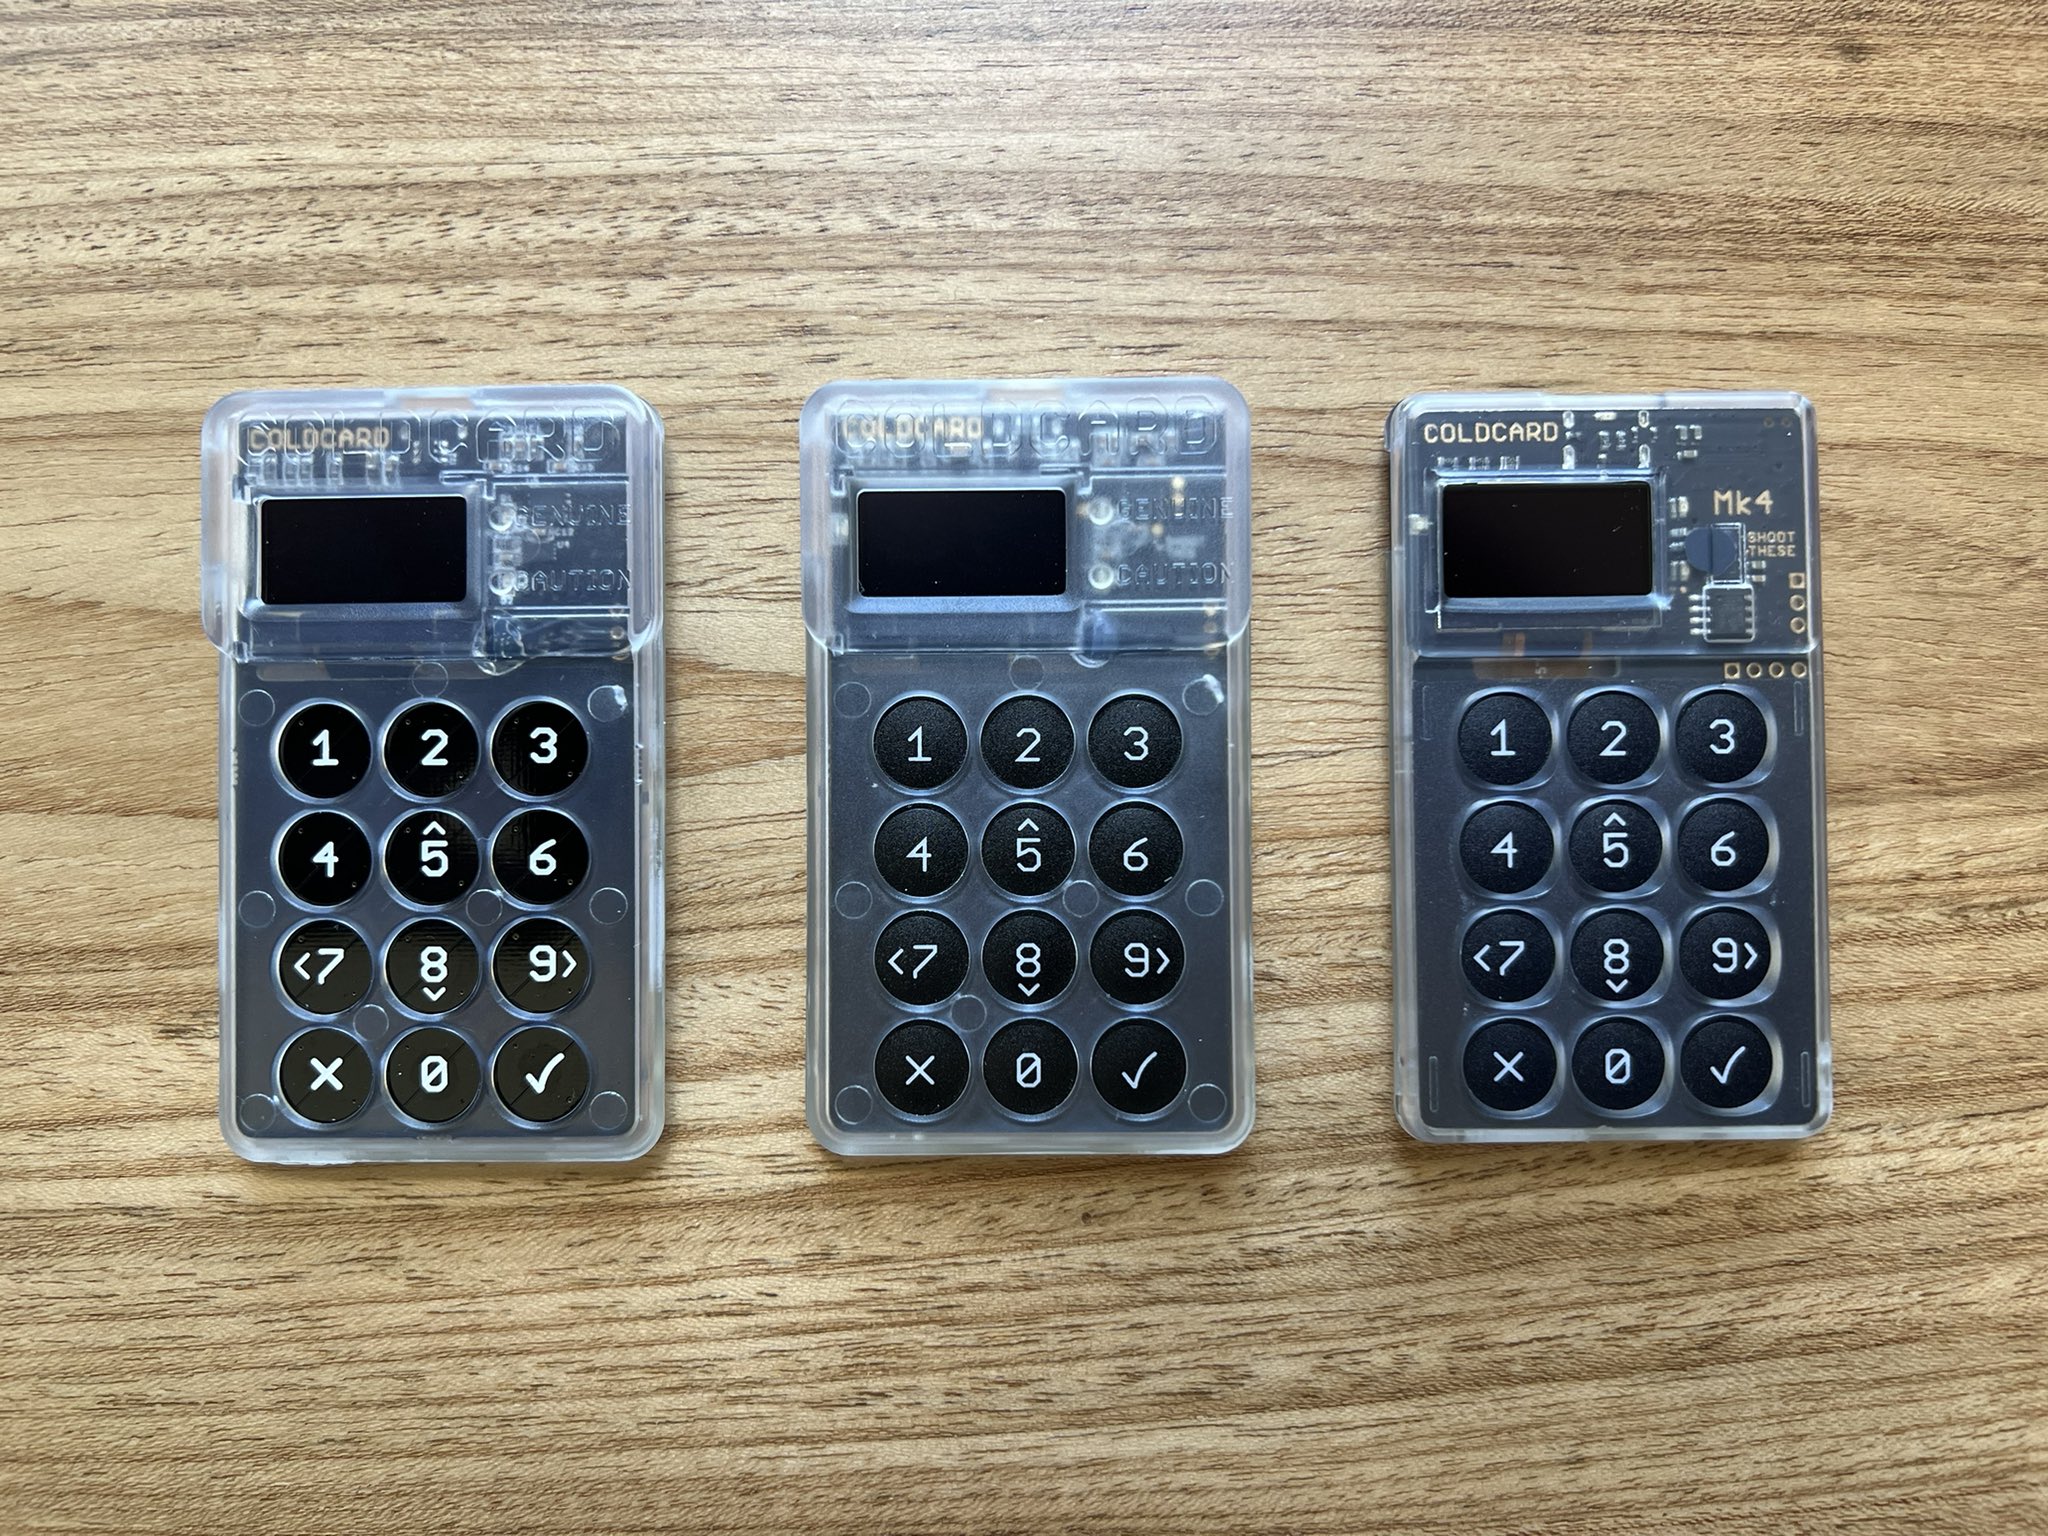 Different ColdCard models